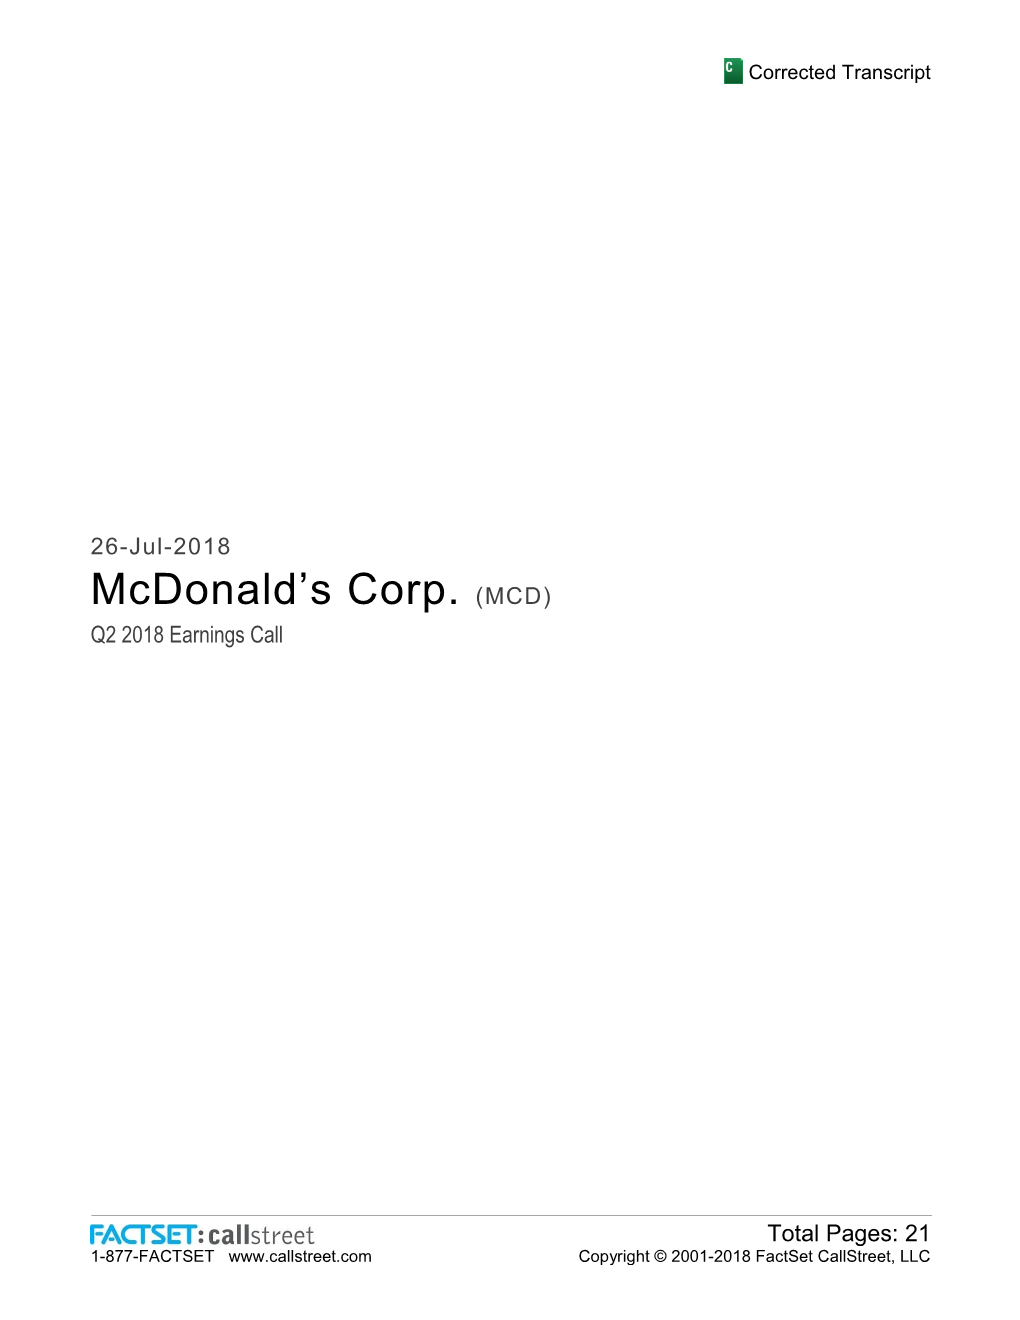 Mcdonald's Corp. (MCD)